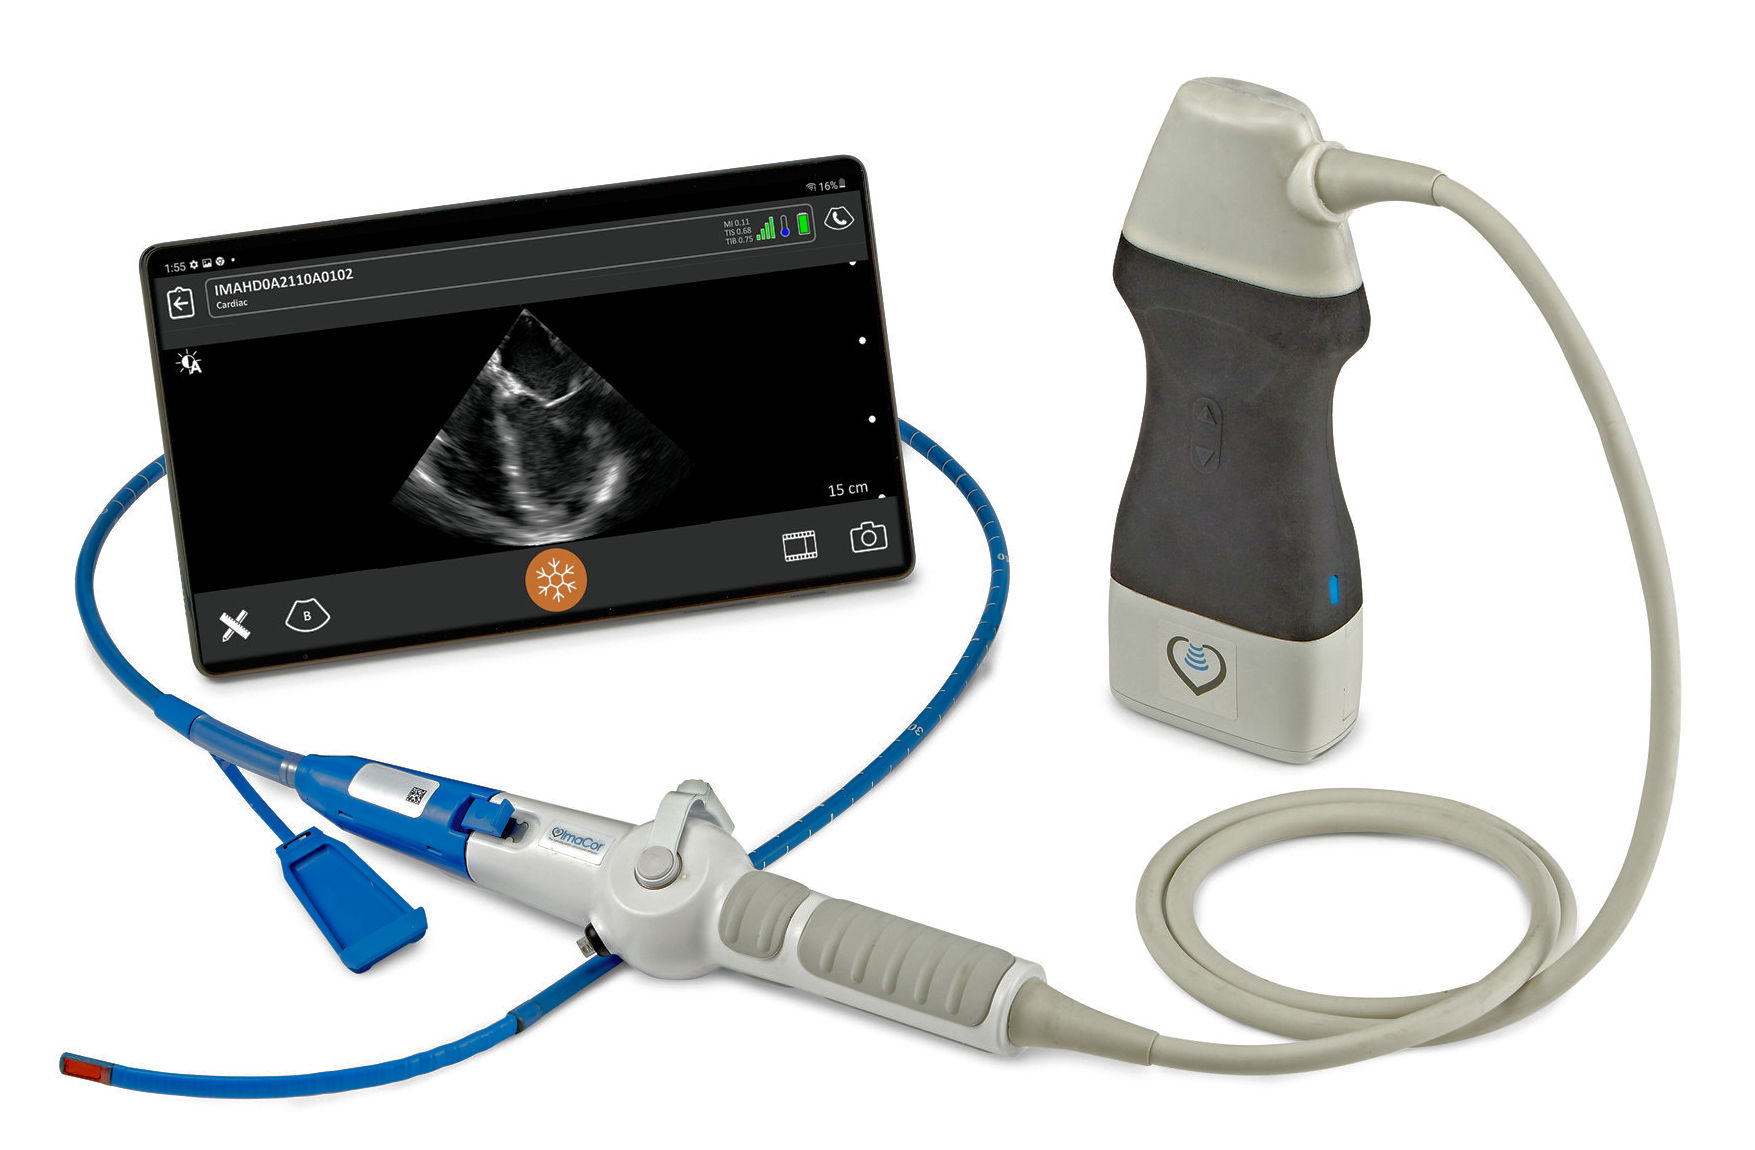  The Zura handheld hemodynamic ultrasound scanner 